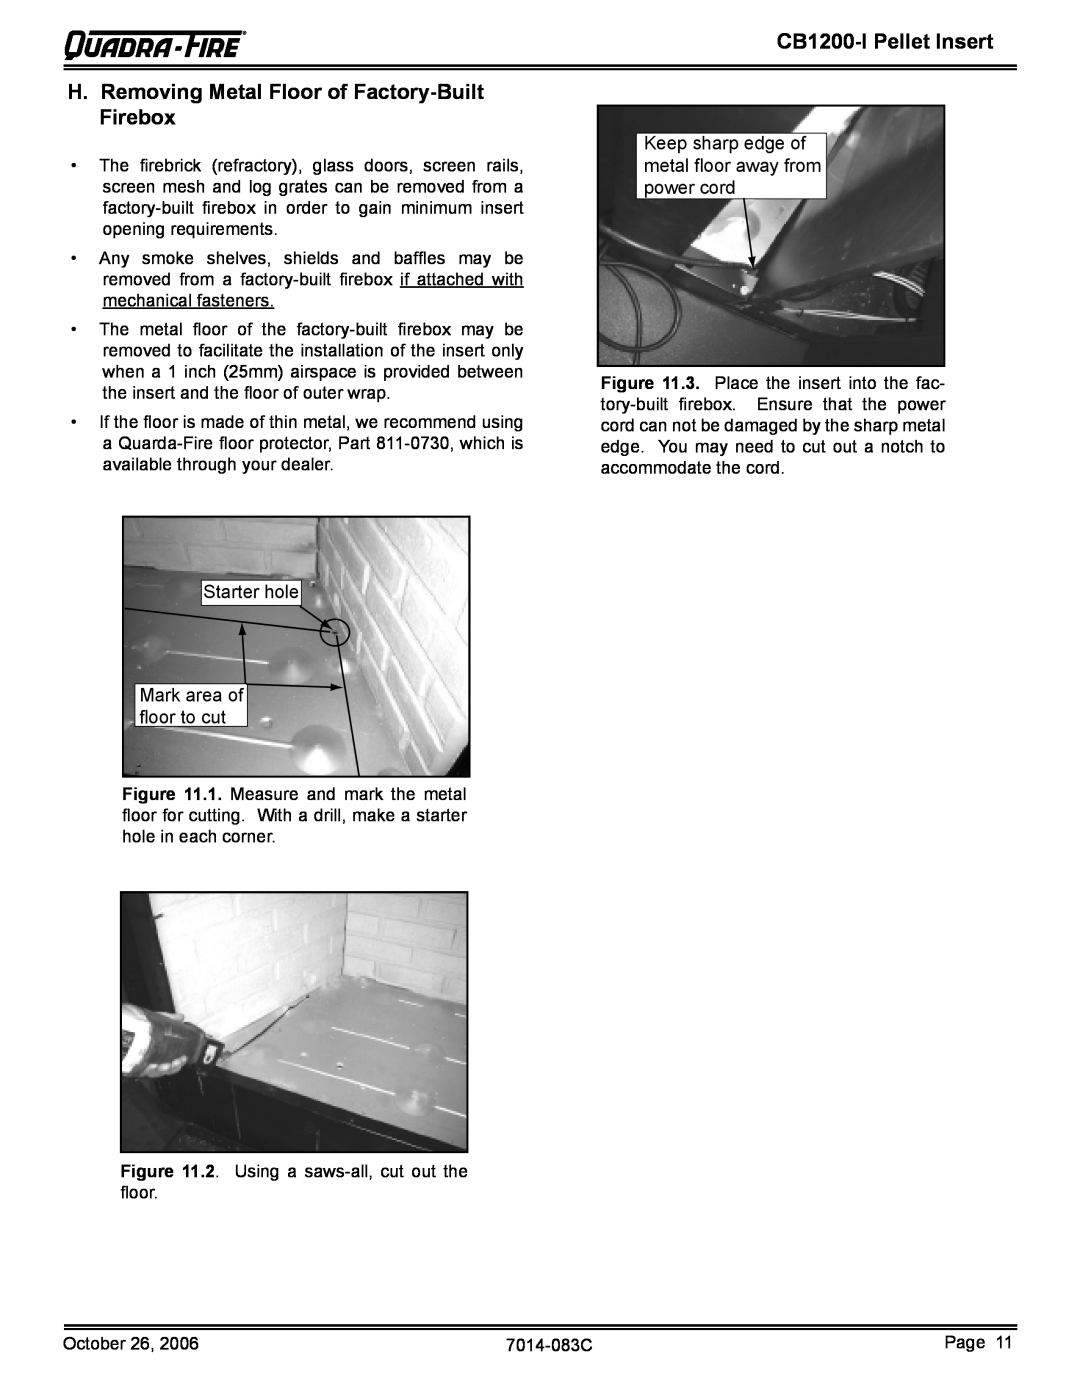 Quadra-Fire CB1200I-B owner manual H.Removing Metal Floor of Factory-BuiltFirebox, CB1200-IPellet Insert 